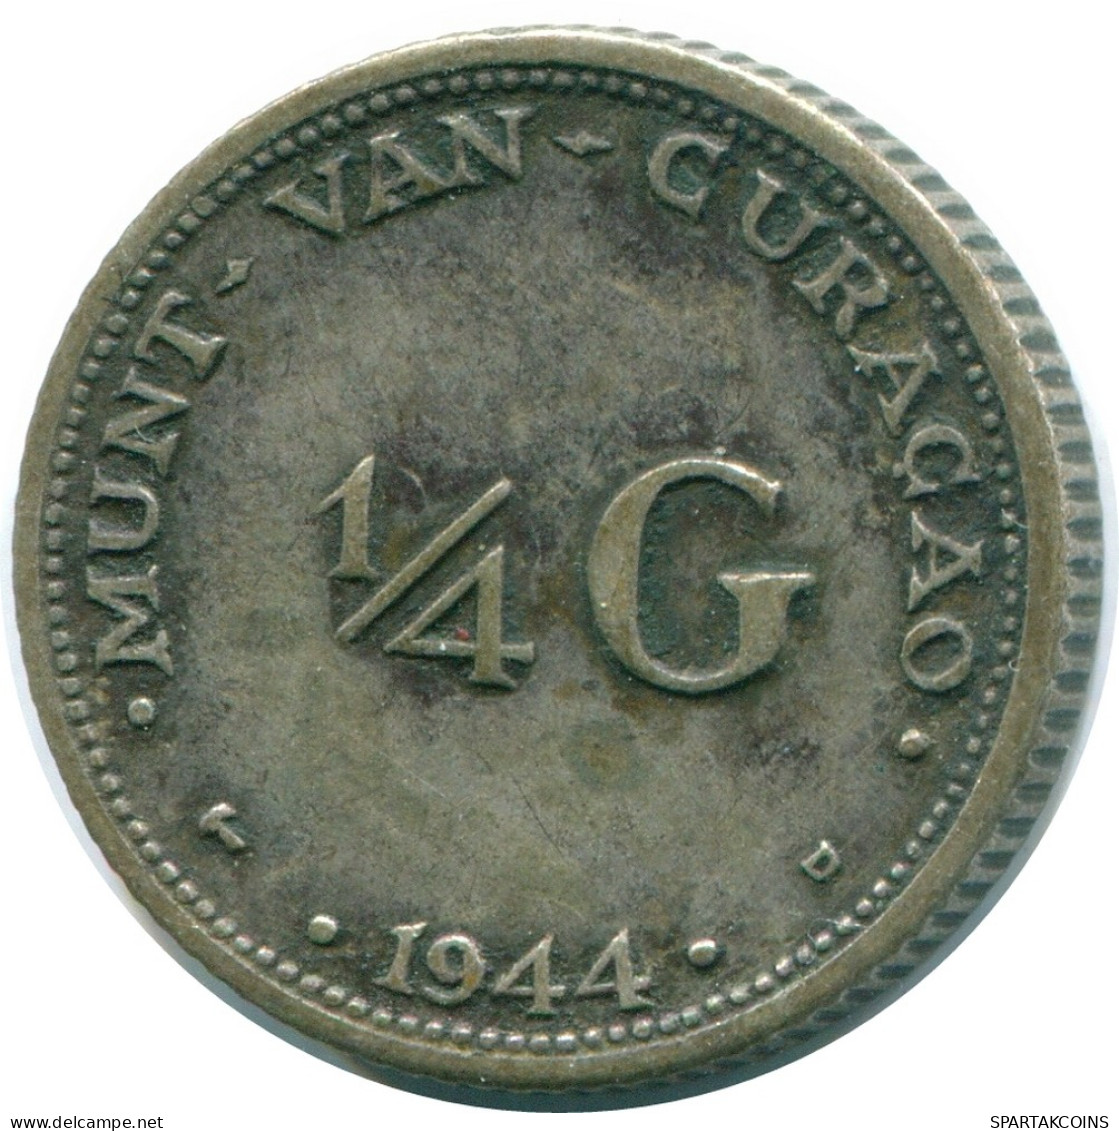 1/4 GULDEN 1944 CURACAO NIEDERLANDE SILBER Koloniale Münze #NL10696.4.D - Curacao